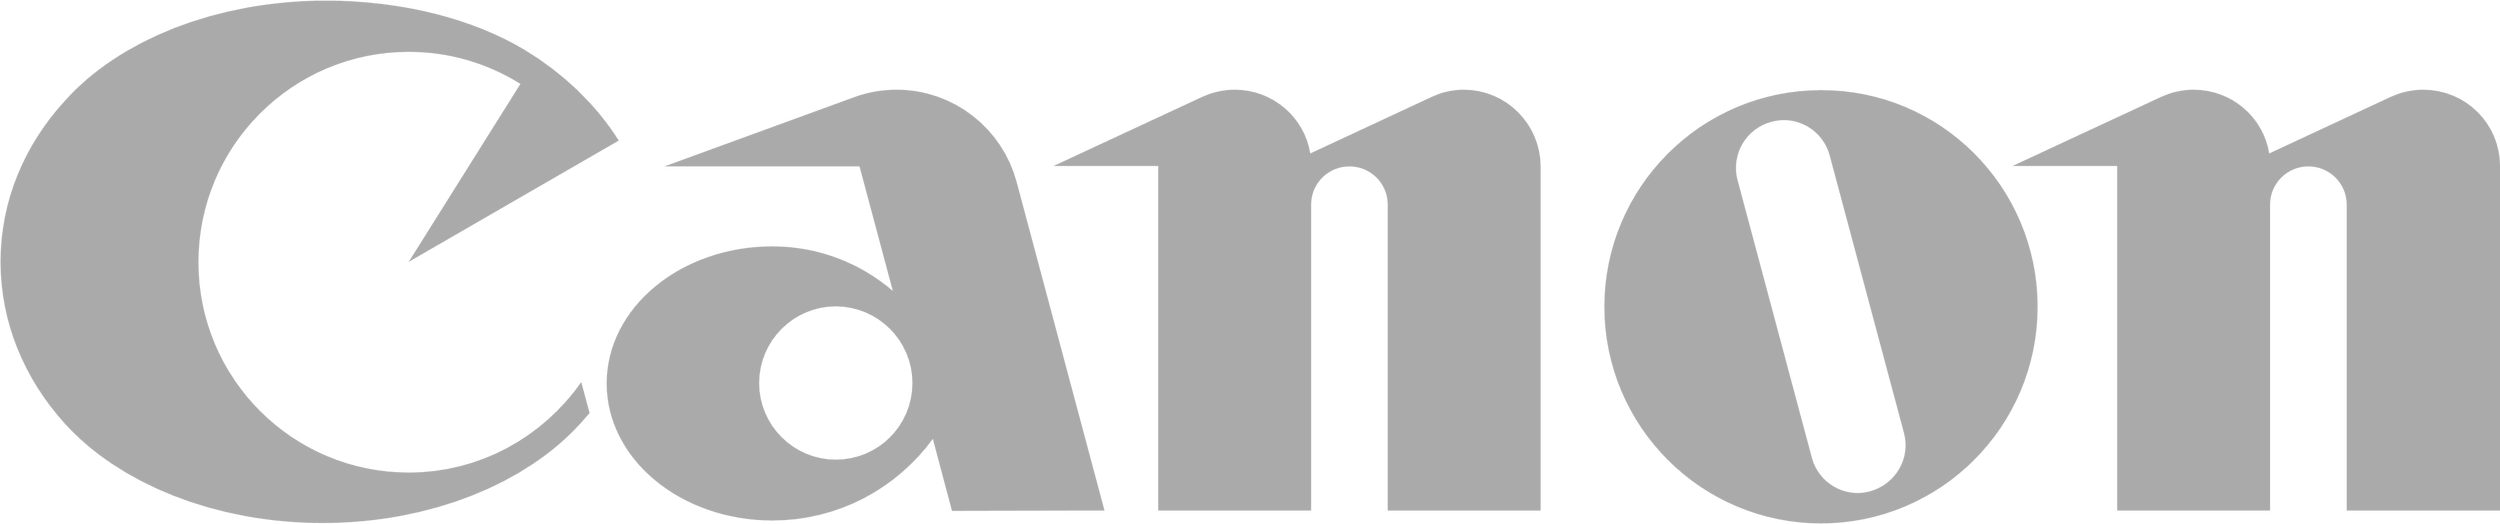 Canon gray logo.png